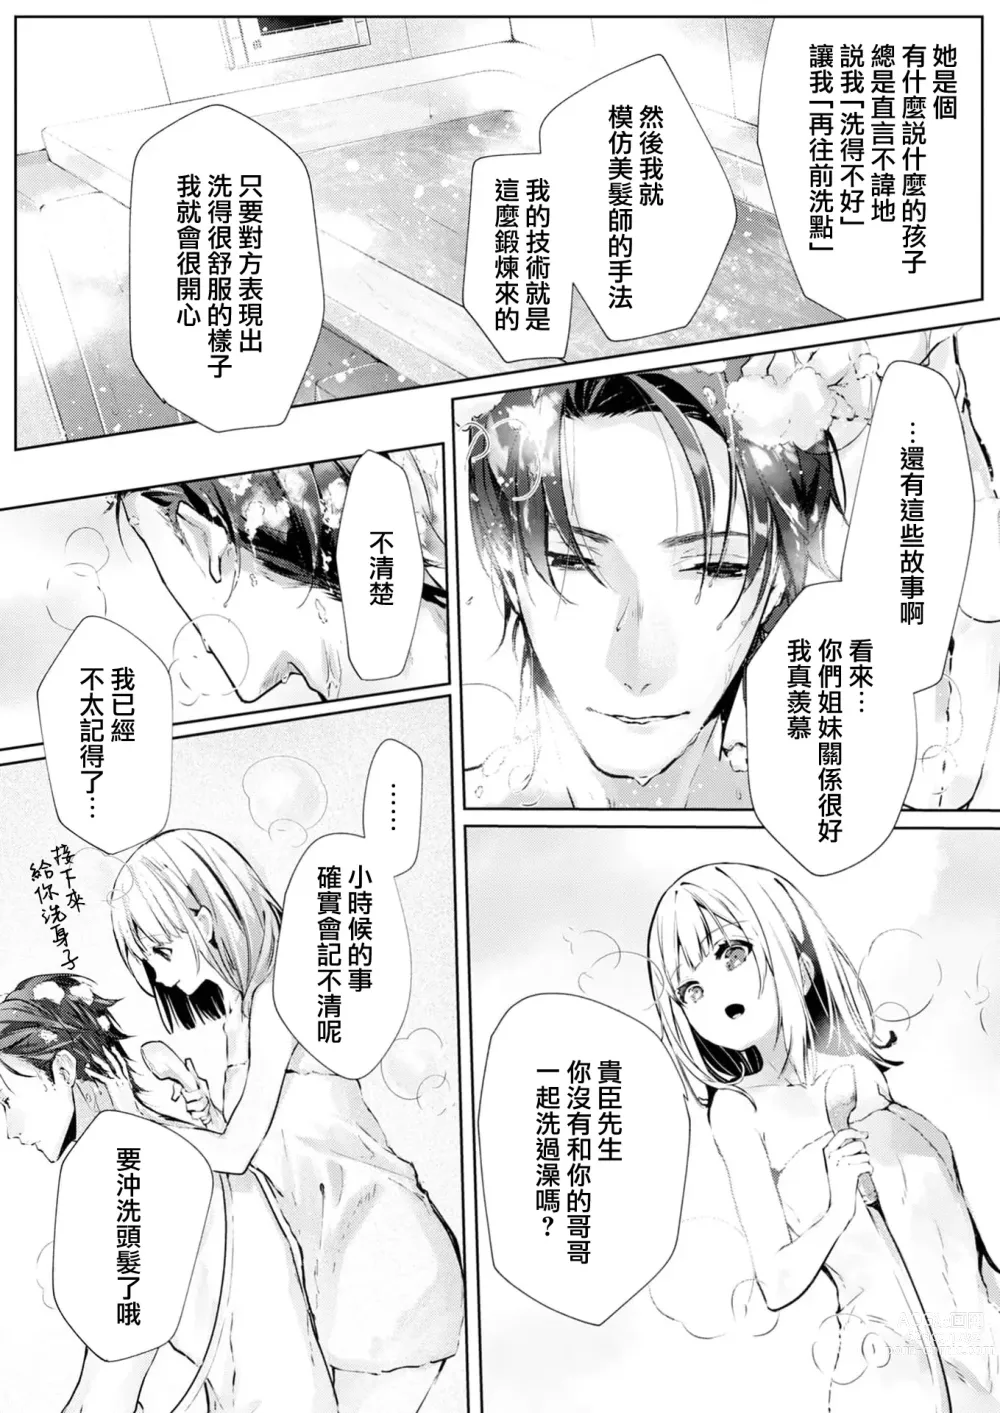 Page 14 of manga 与极致温柔丈夫的新婚生活并不如意 1